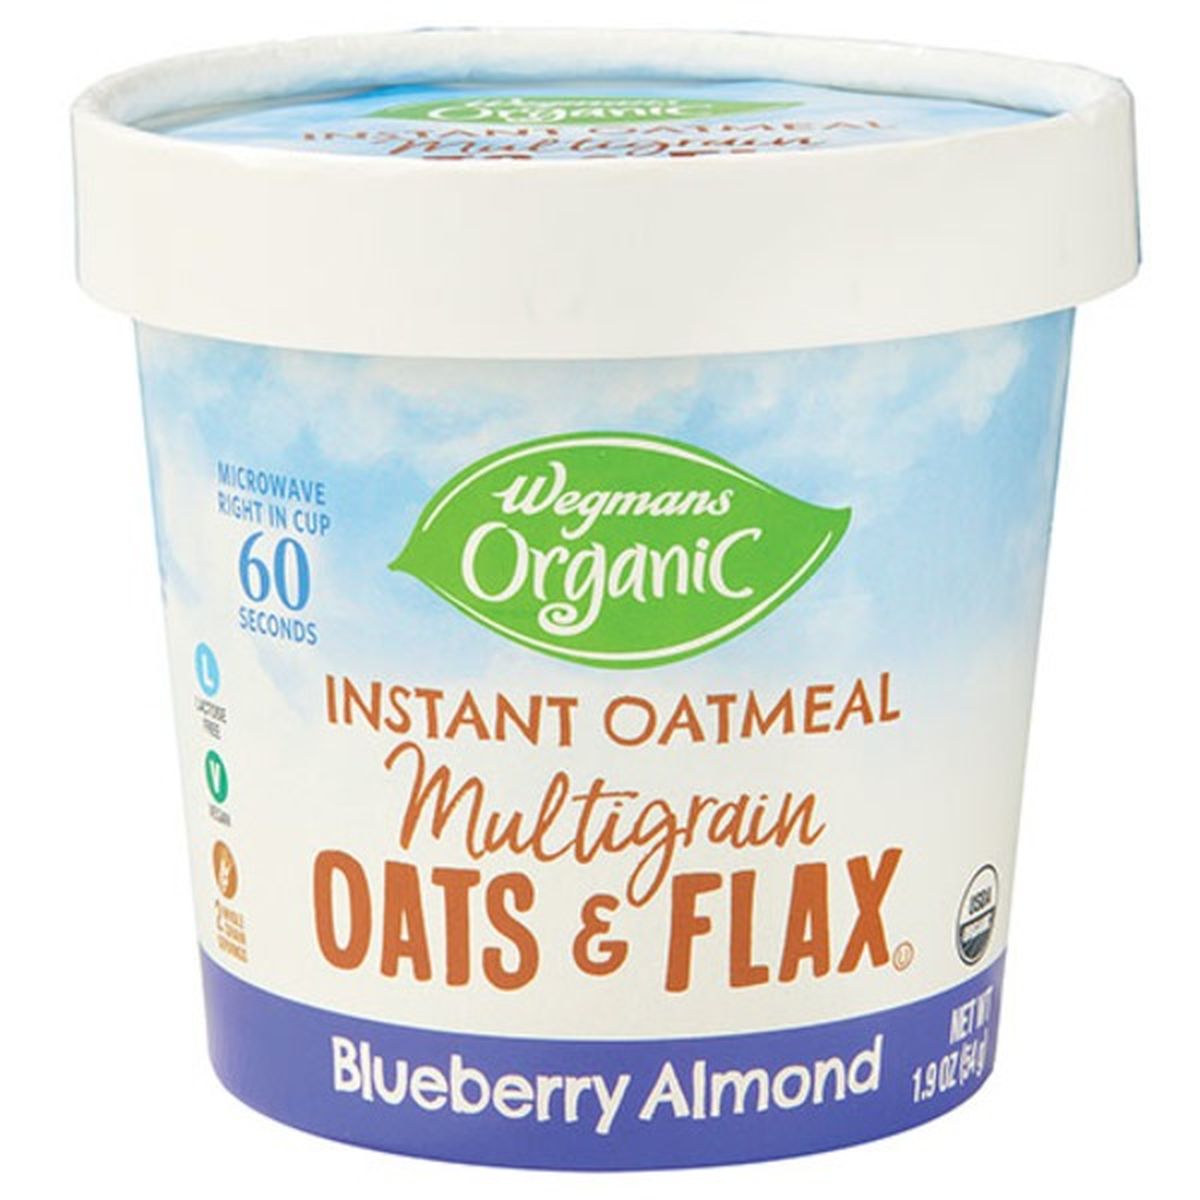 Calories in Wegmans Organic Blueberry Almond Oats & Flax Instant Oatmeal